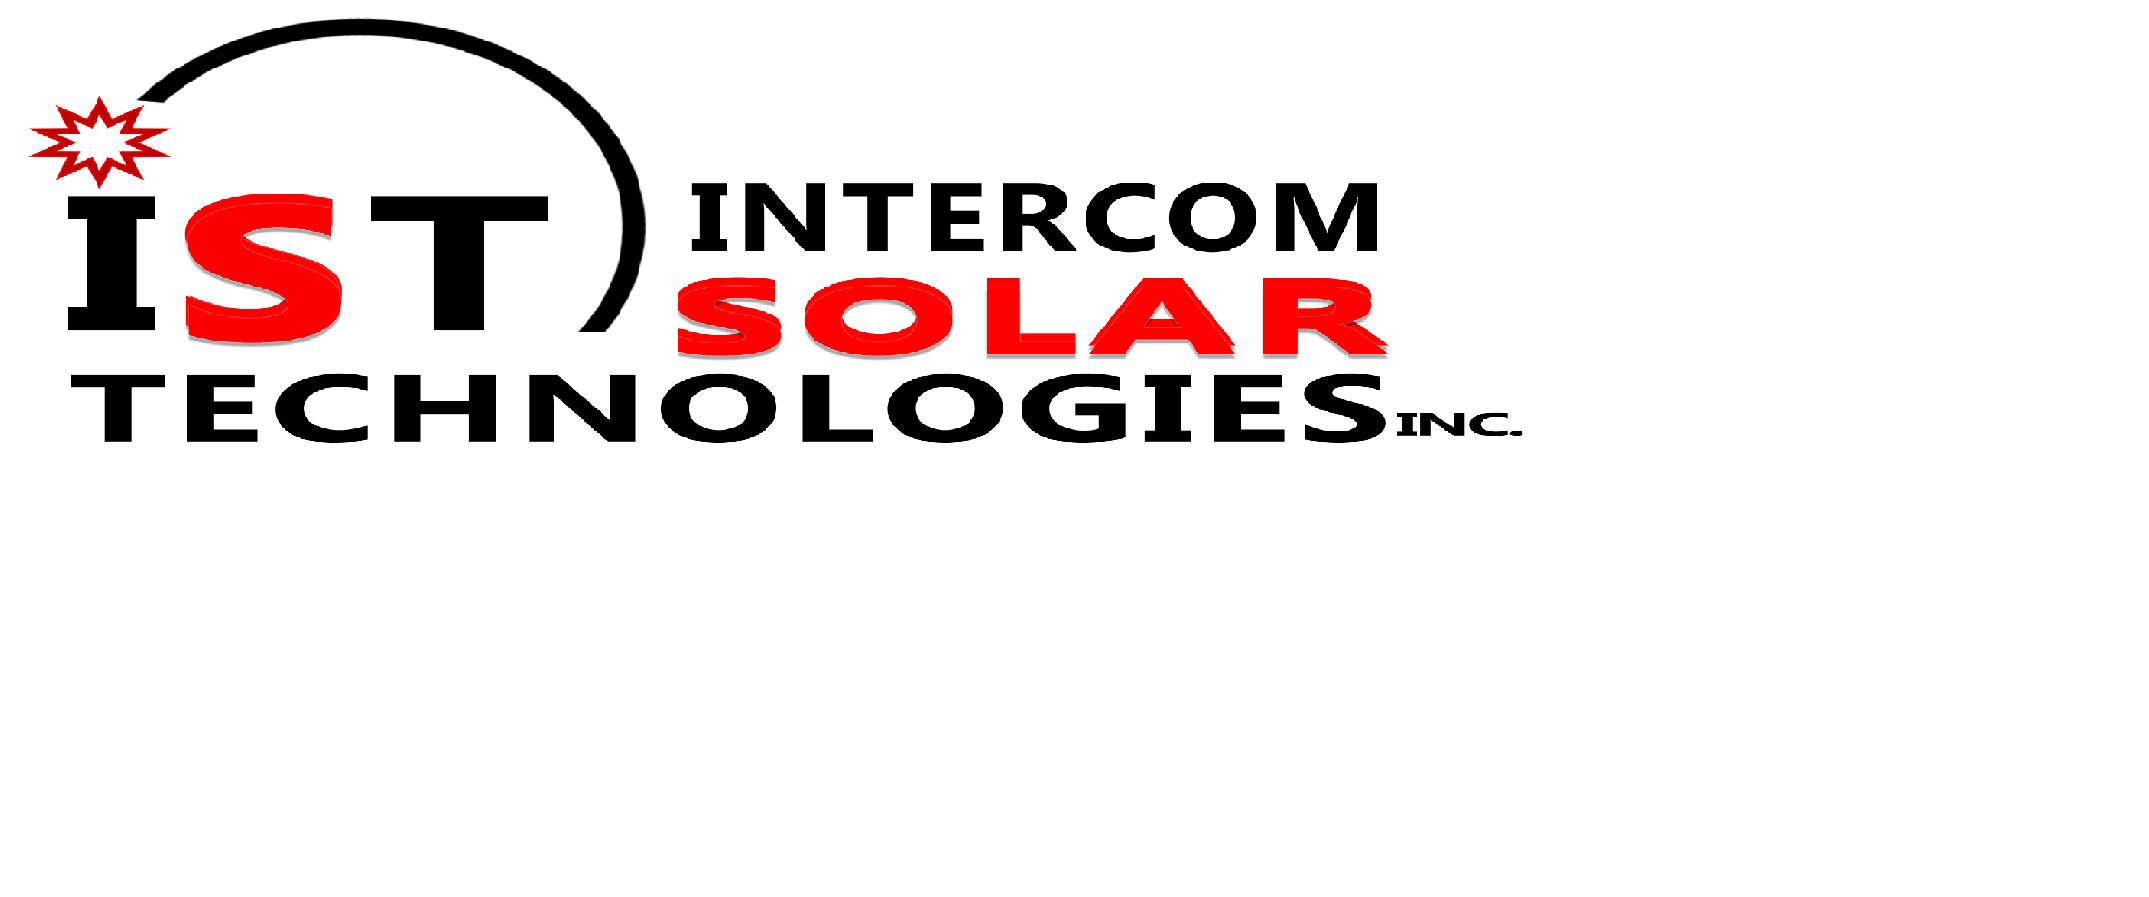 INTERCOM SOLAR TECHNOLOGIES, INC Logo